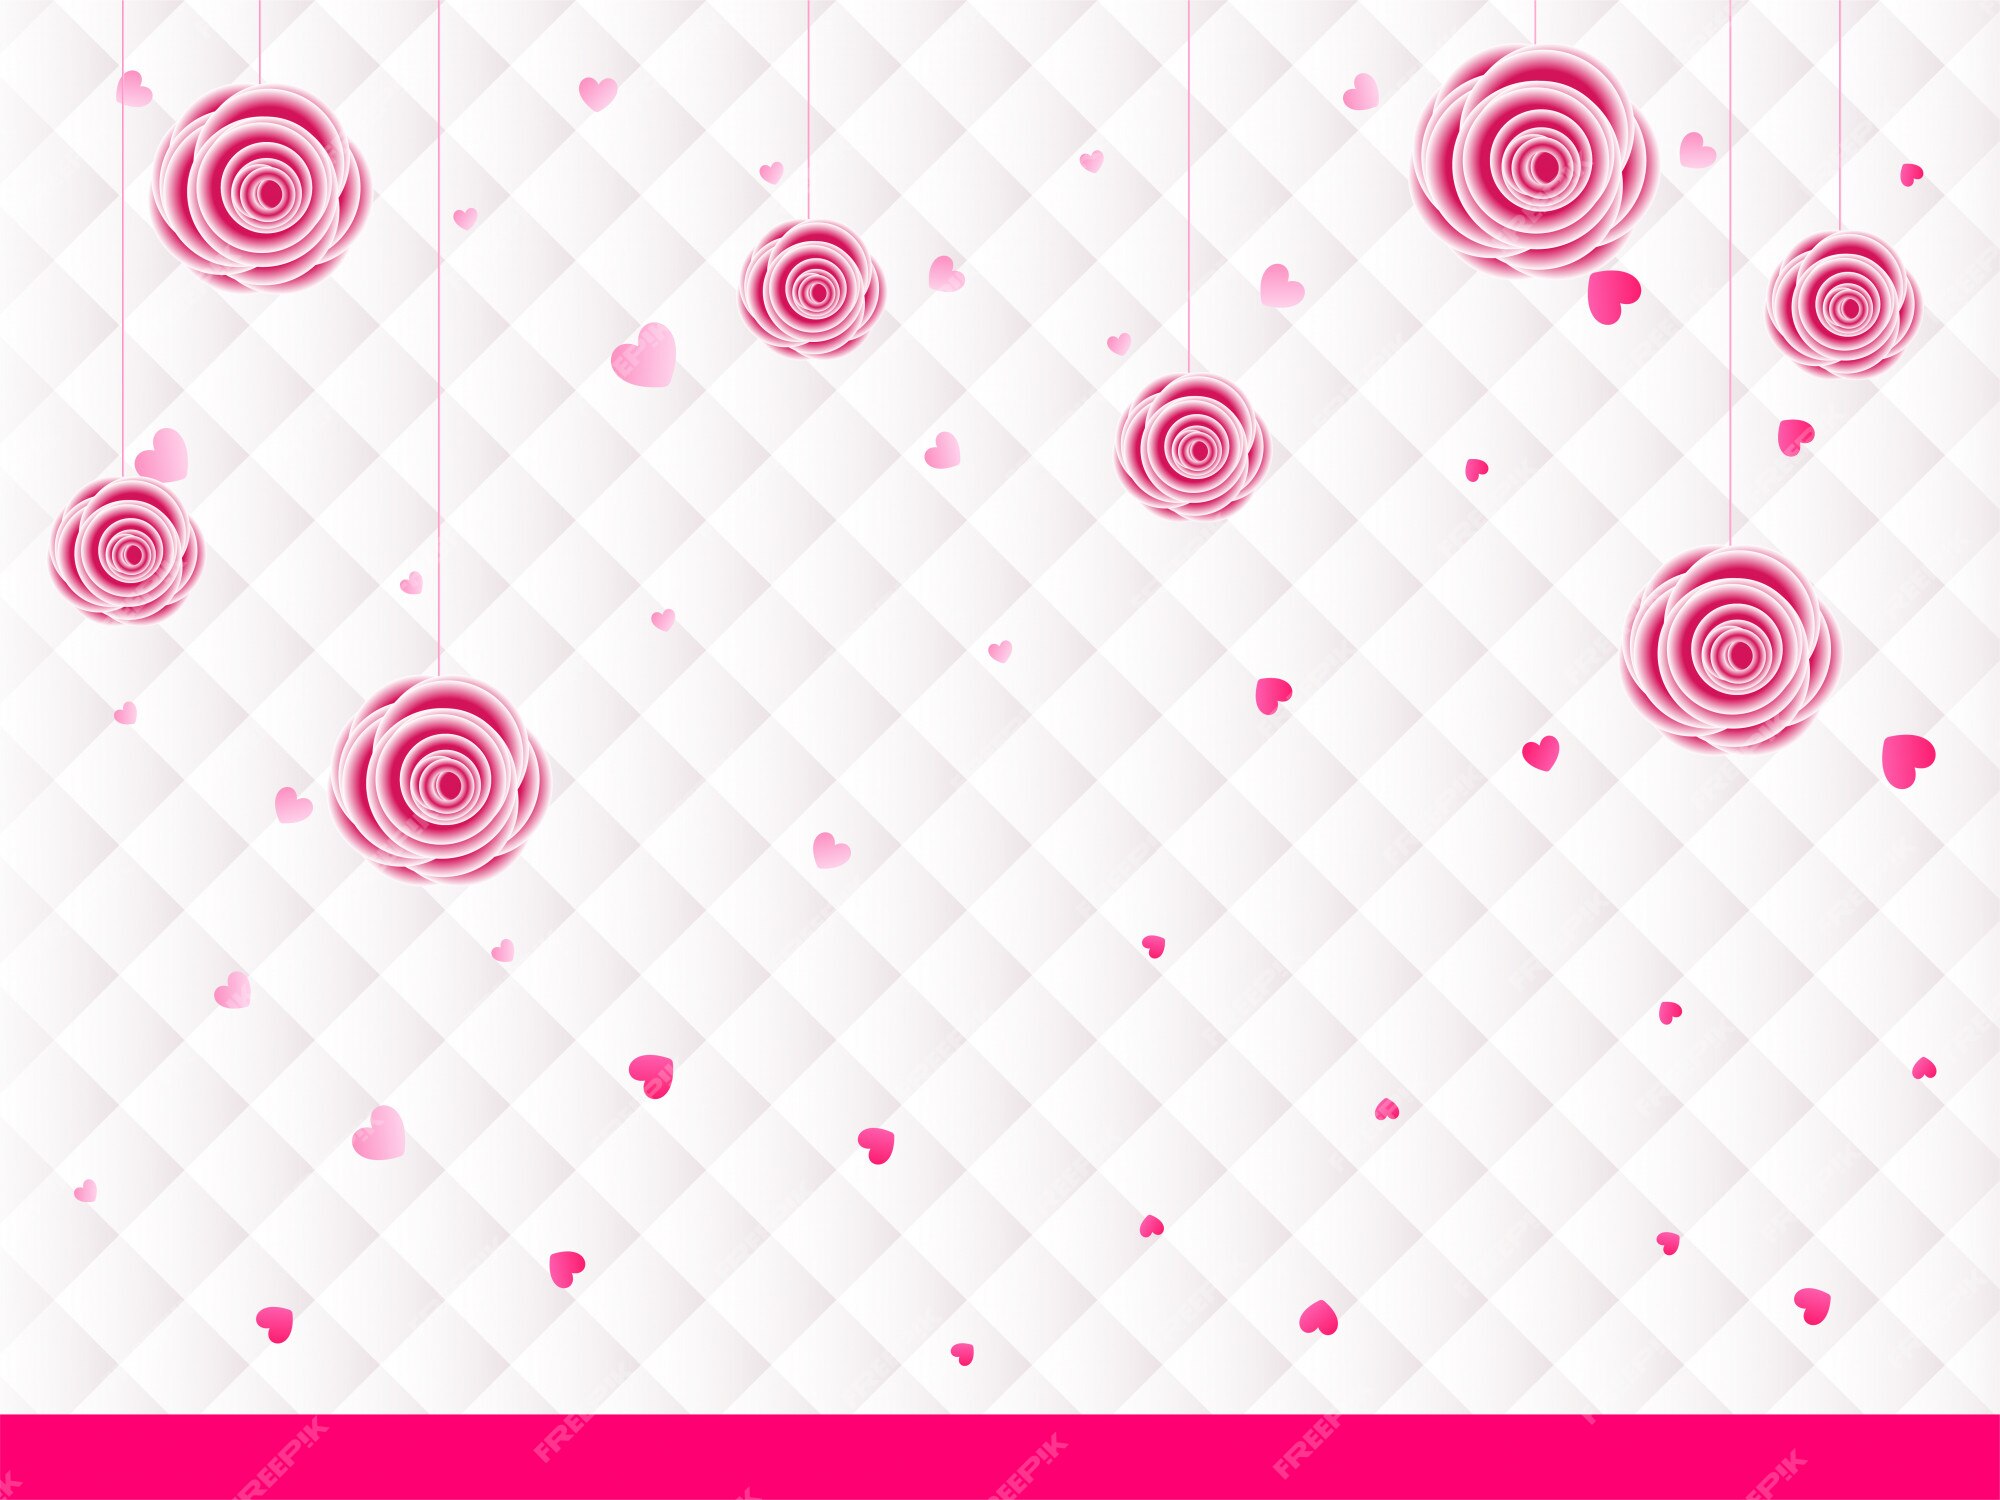 Love Rose Wallpaper Images - Free Download on Freepik